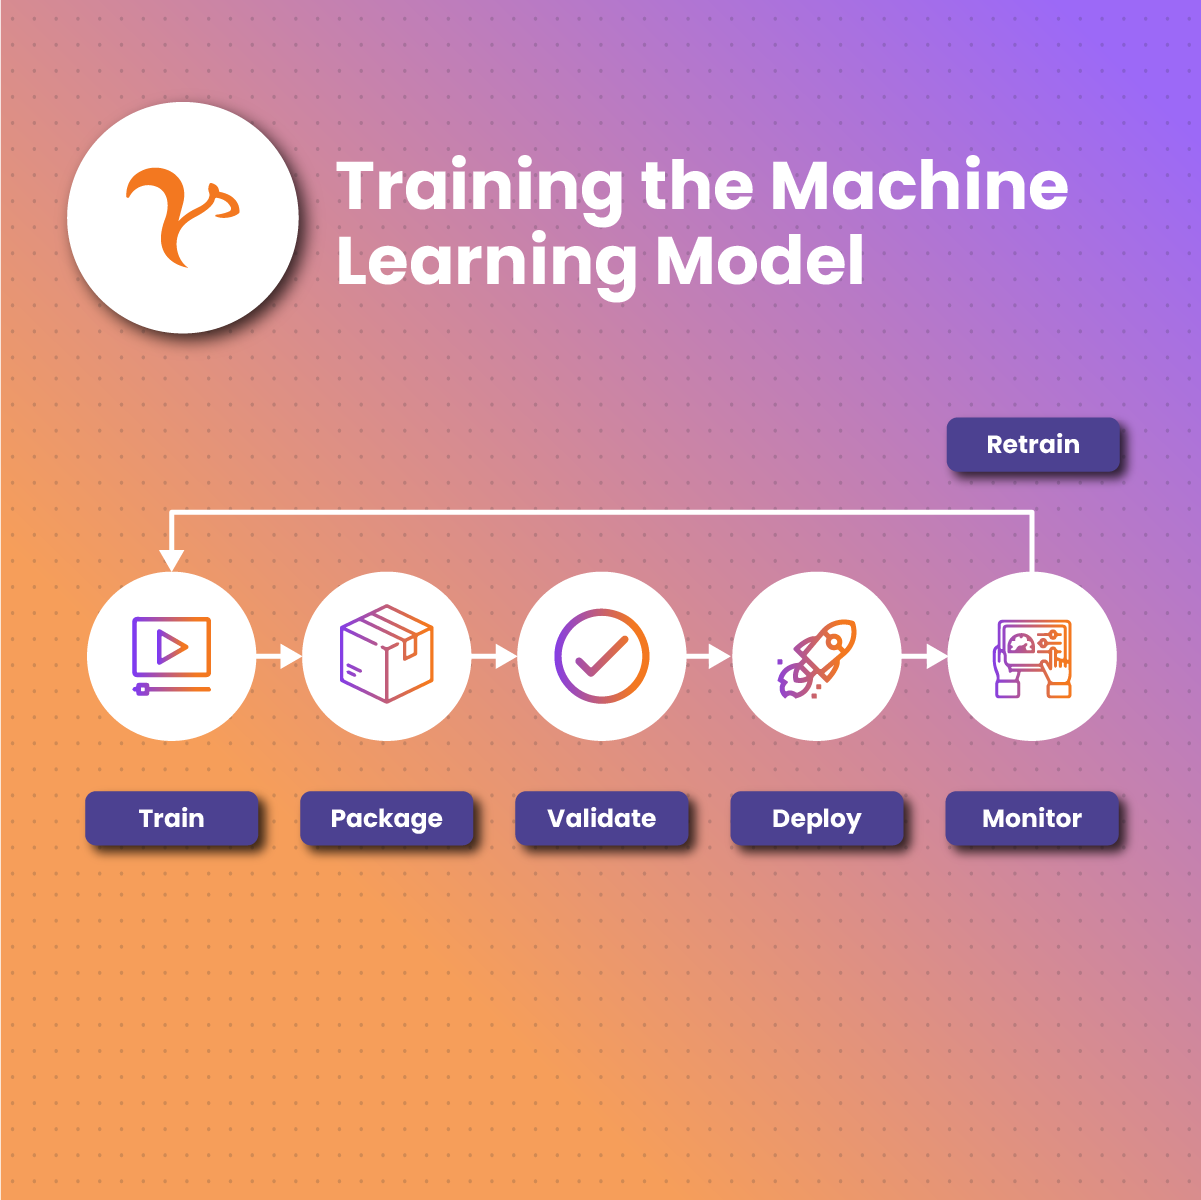 Training the Machine Learning Model